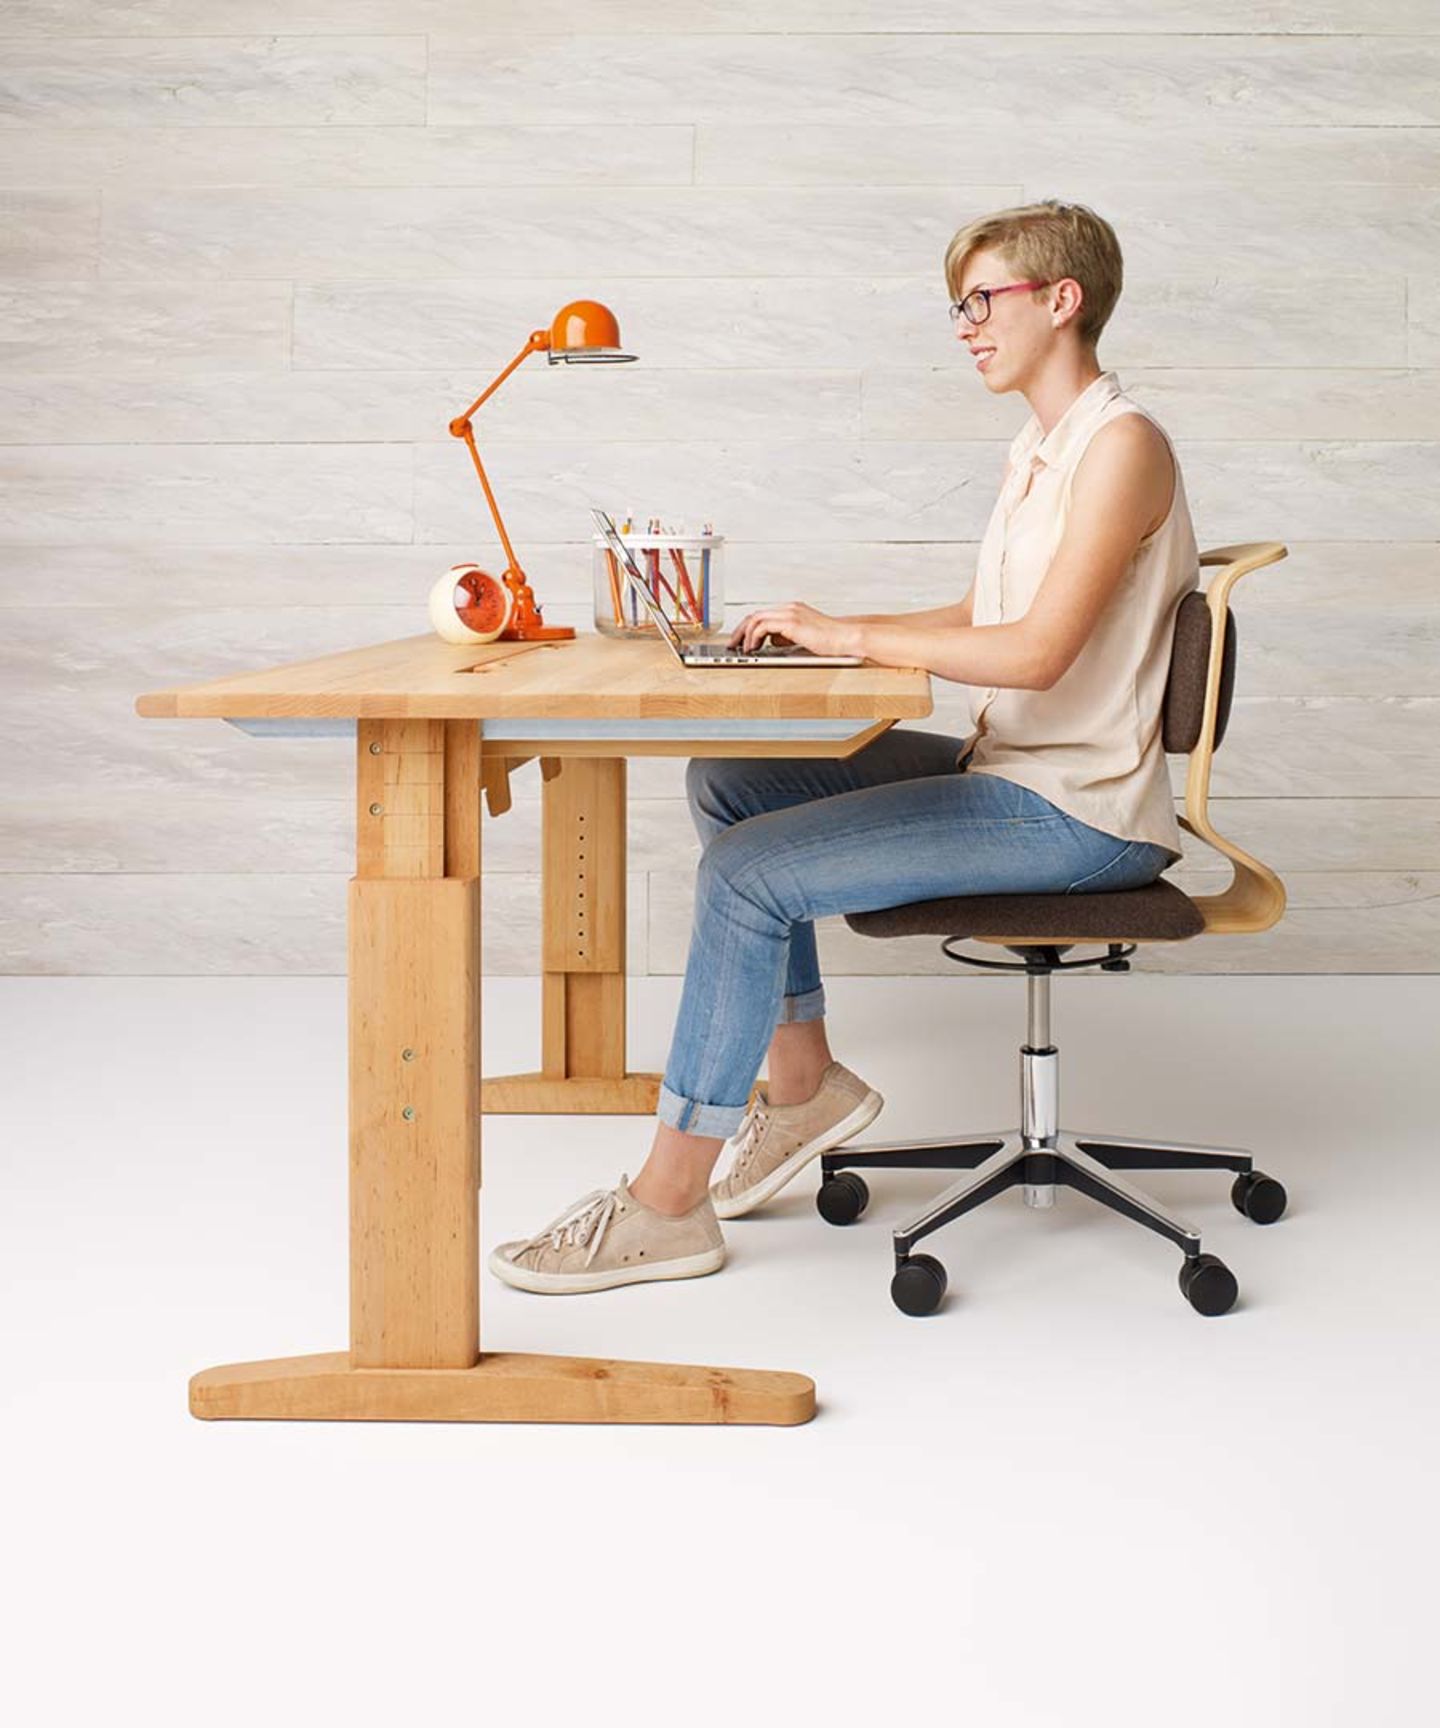 mobile height-adjustable desk made of solid wood